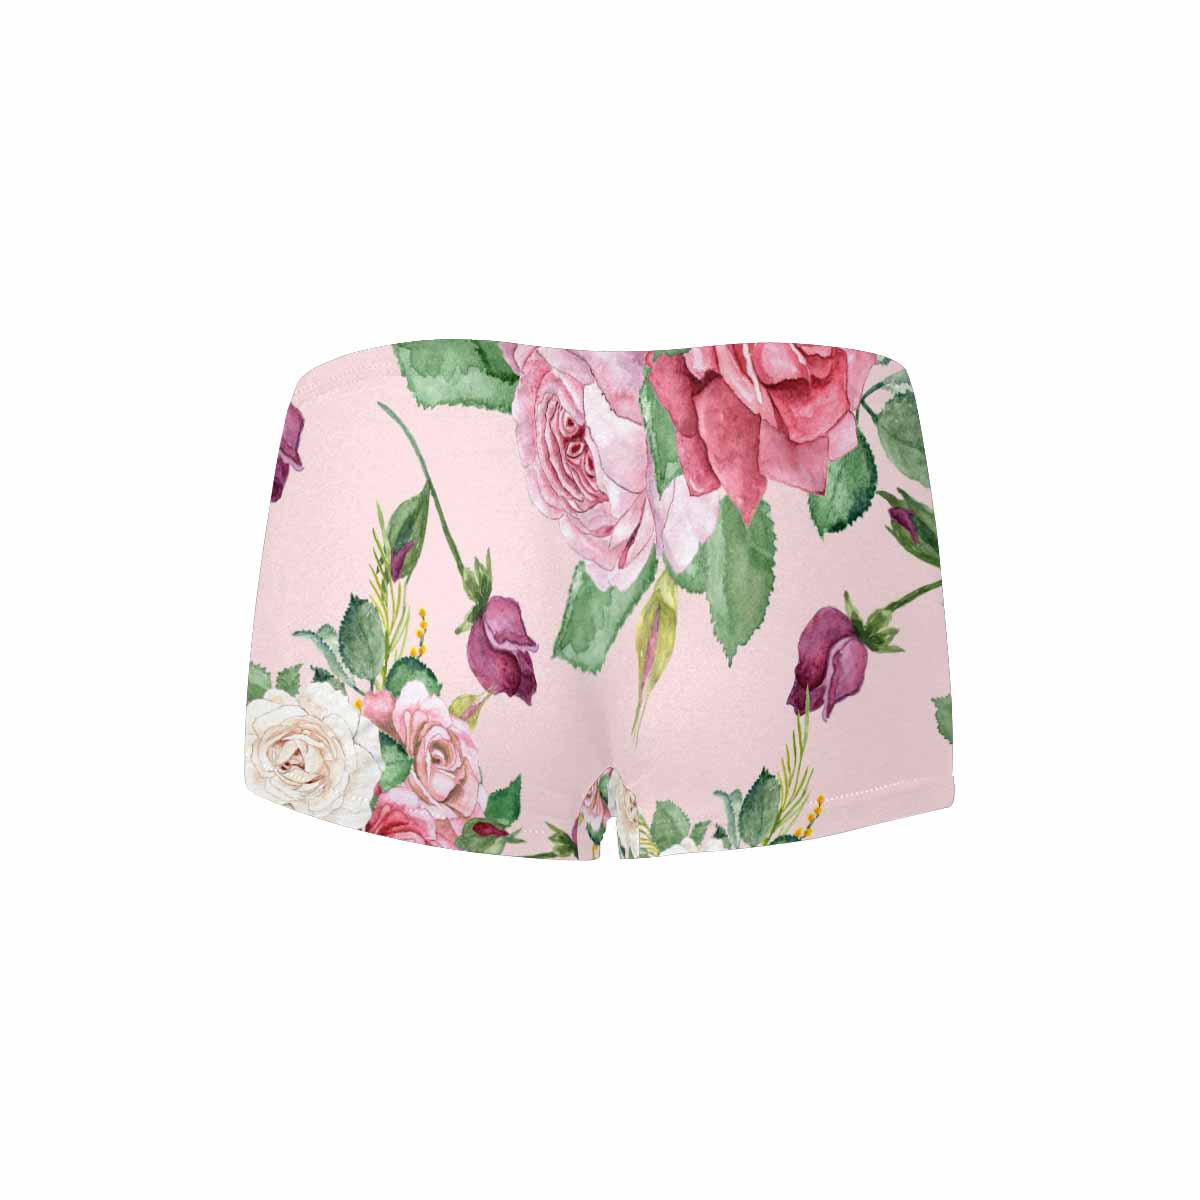 Floral 2, boyshorts, daisy dukes, pum pum shorts, panties, design 58